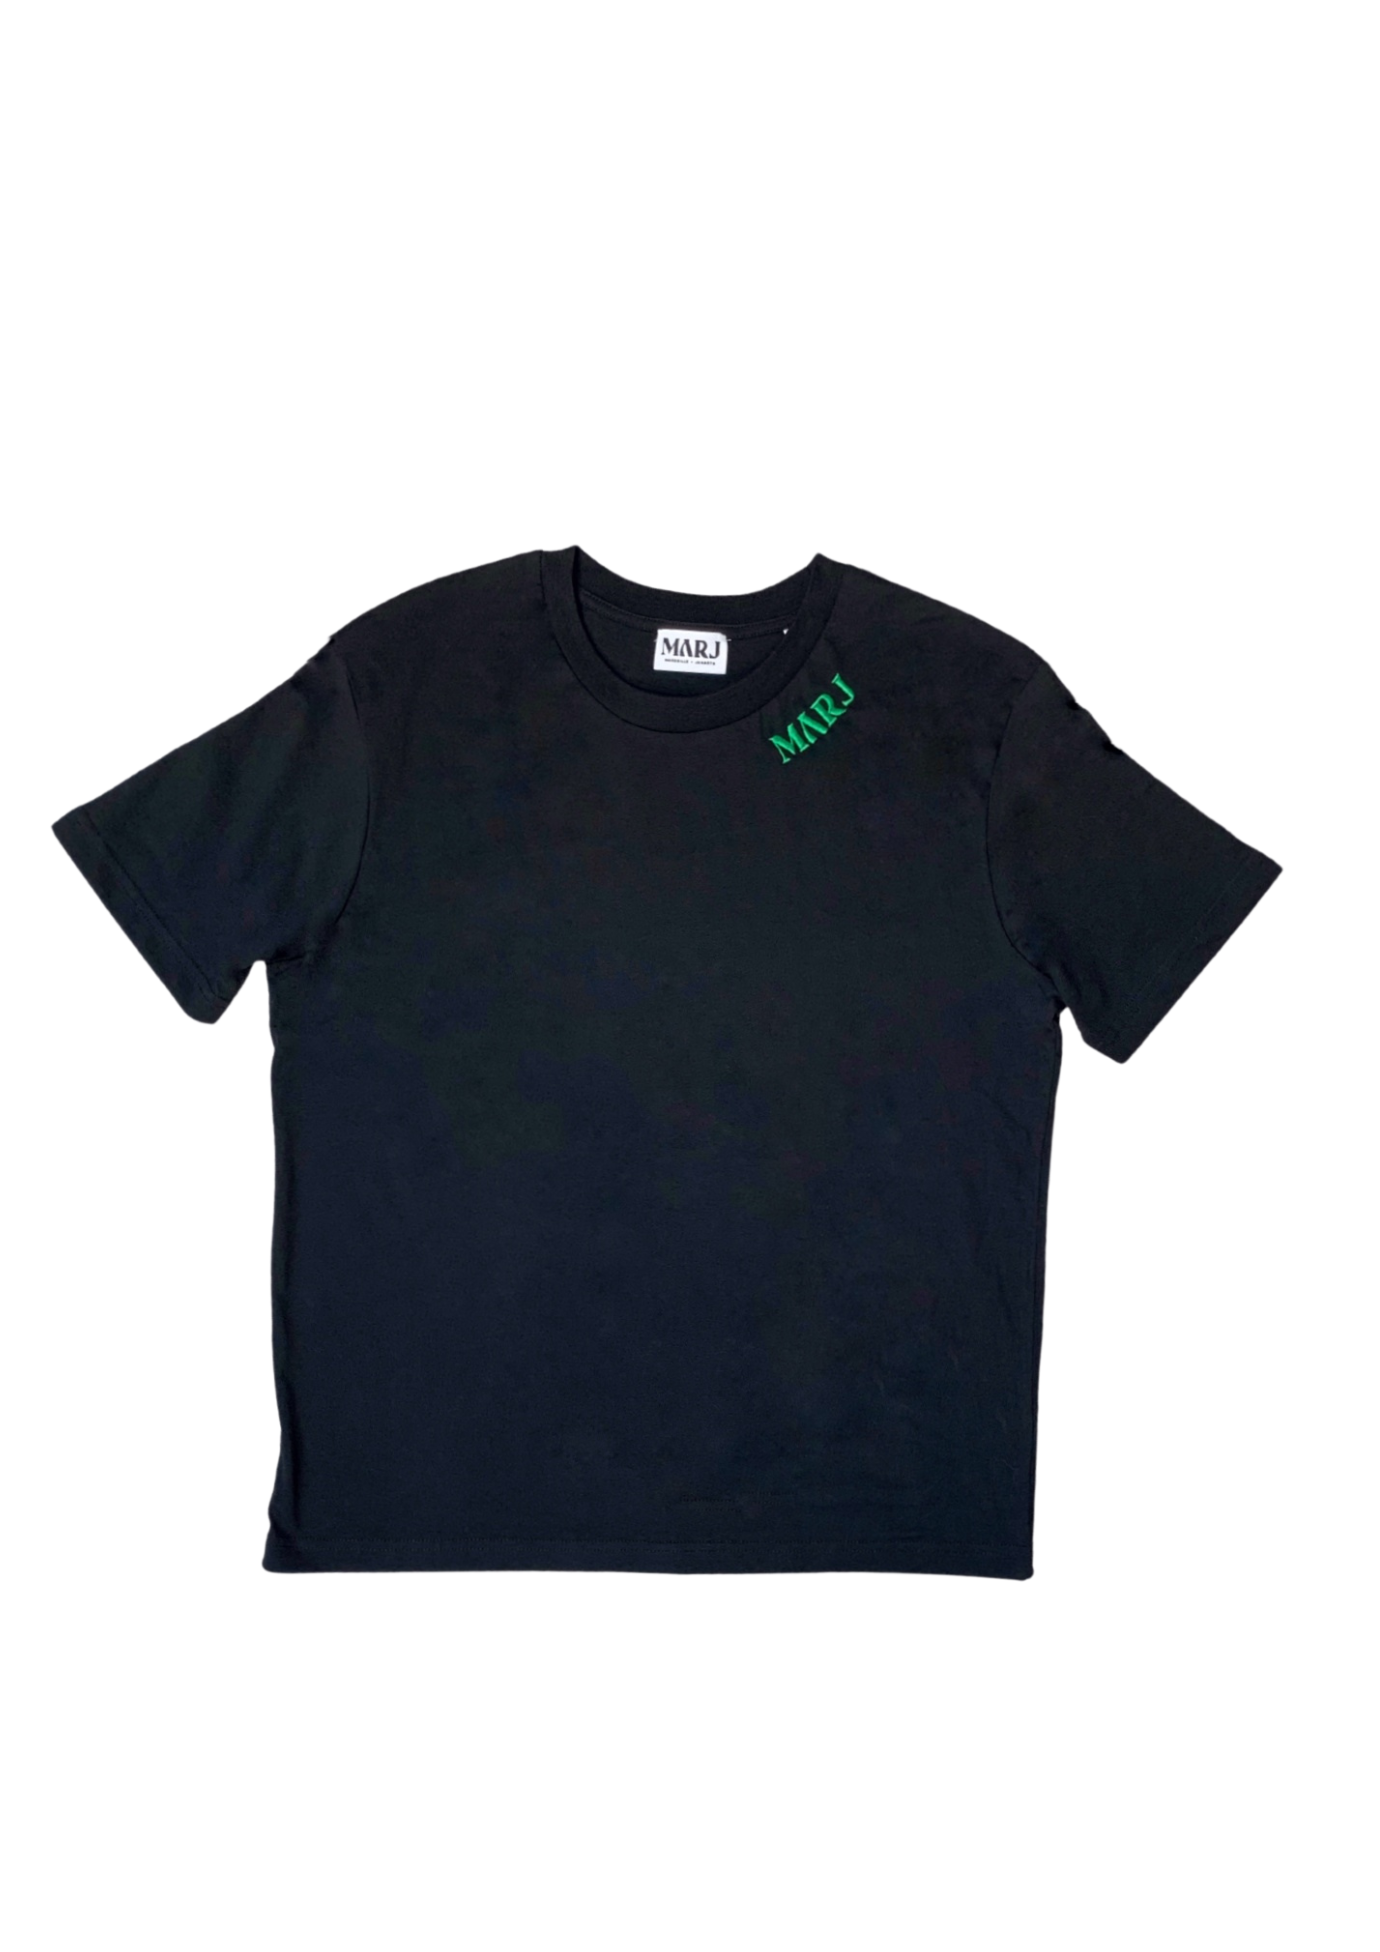 MARJ sustainable fashion black T shirt green embroidery streetwear